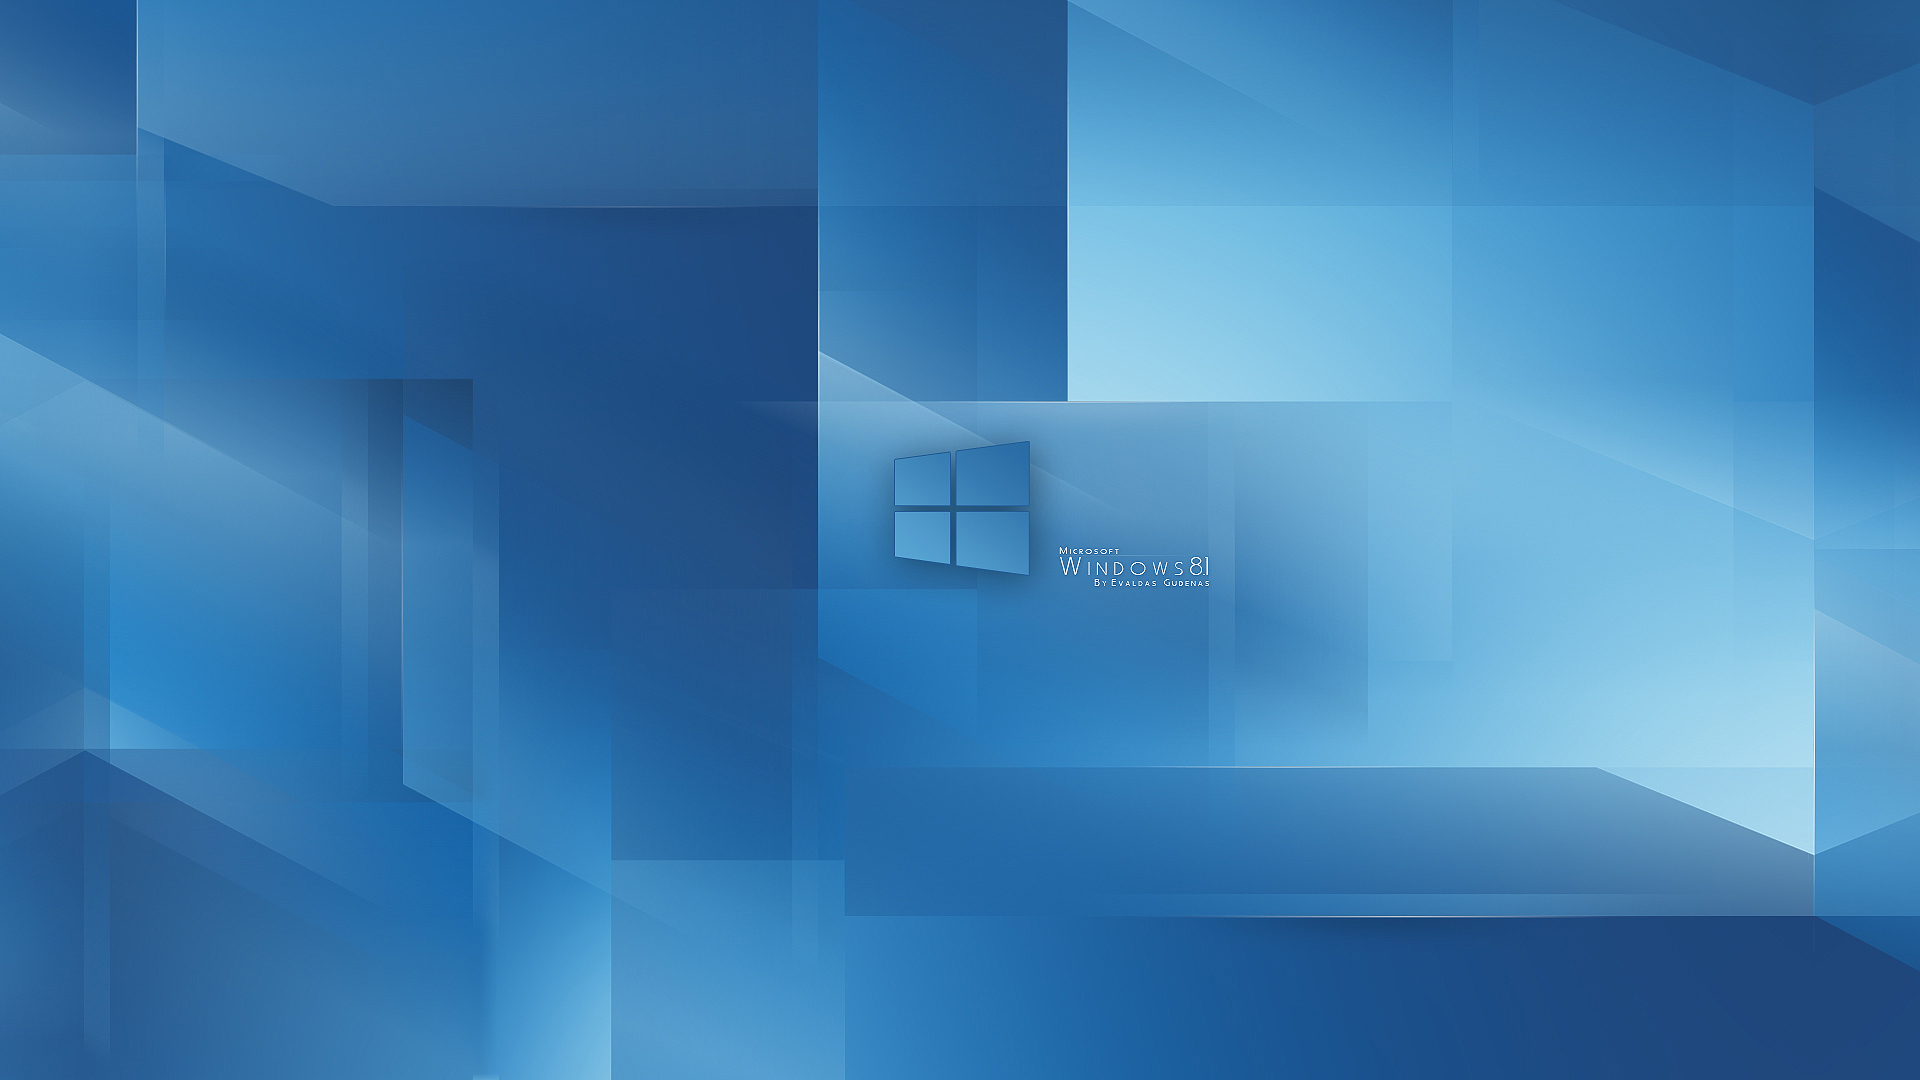 [33+] Windows 8.1 Wallpaper HD 1366x768 on WallpaperSafari Full Hd Wallpapers For Windows 8 1920x1080